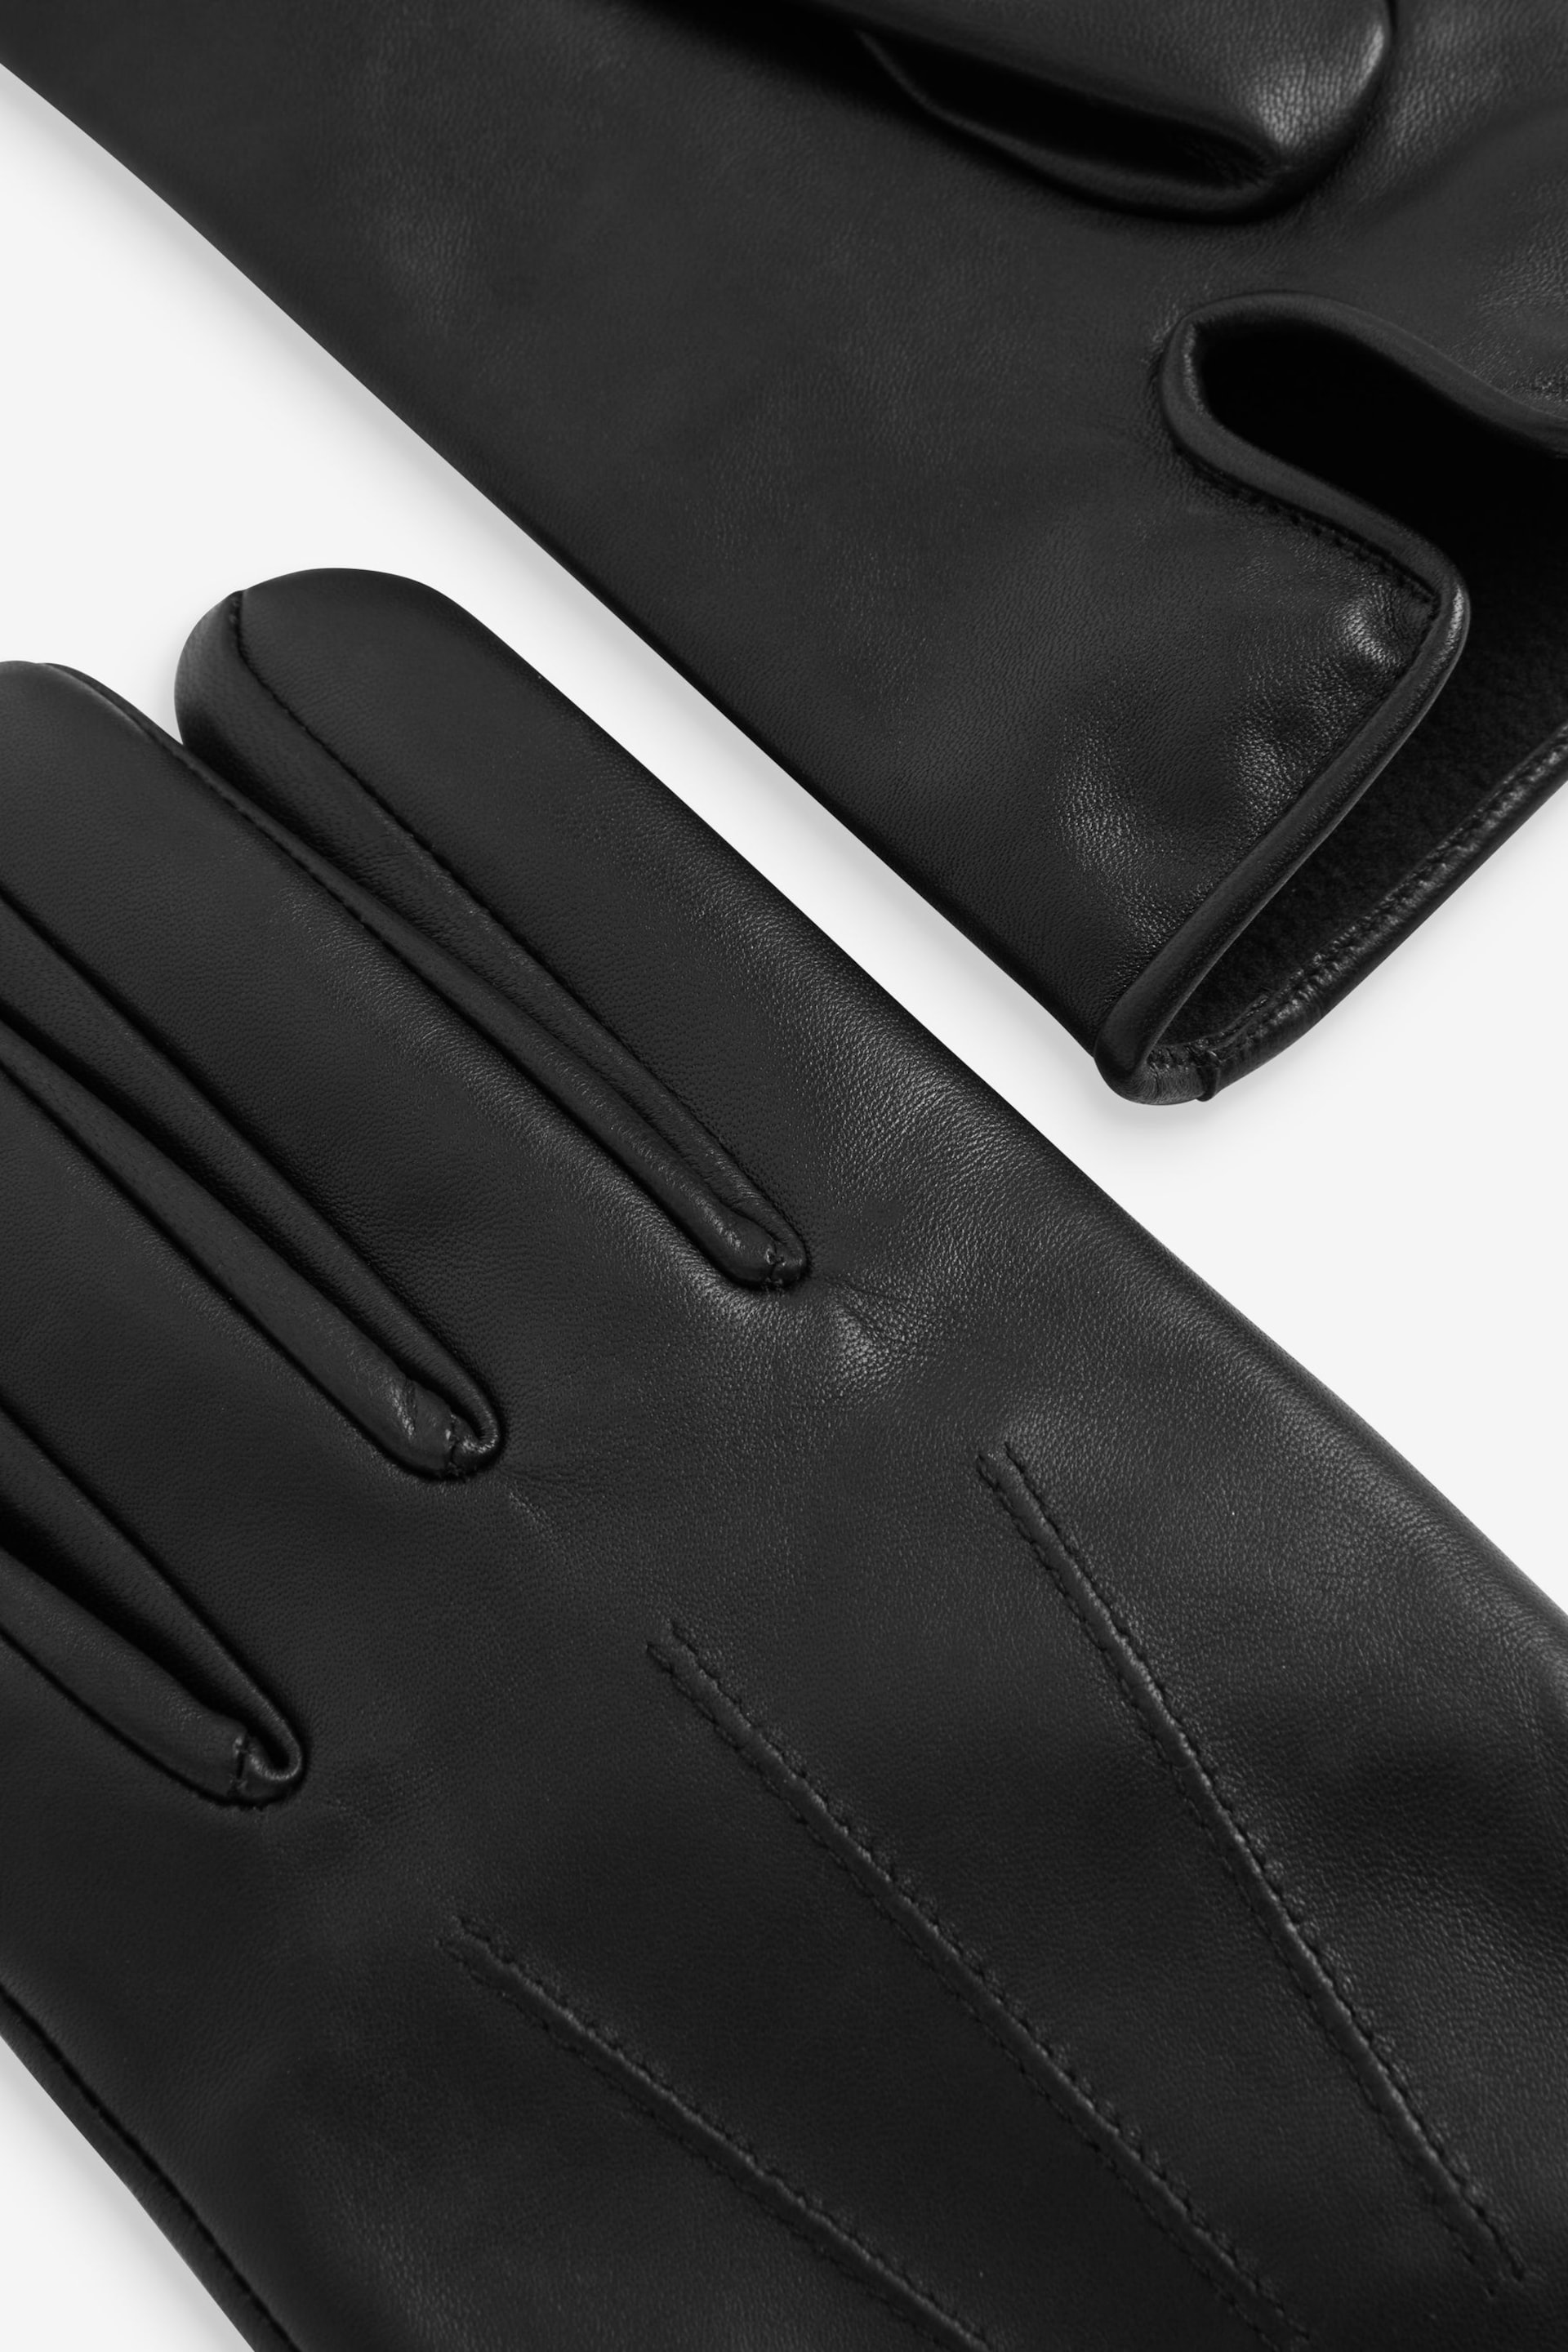 Black Leather Gloves - Image 4 of 4